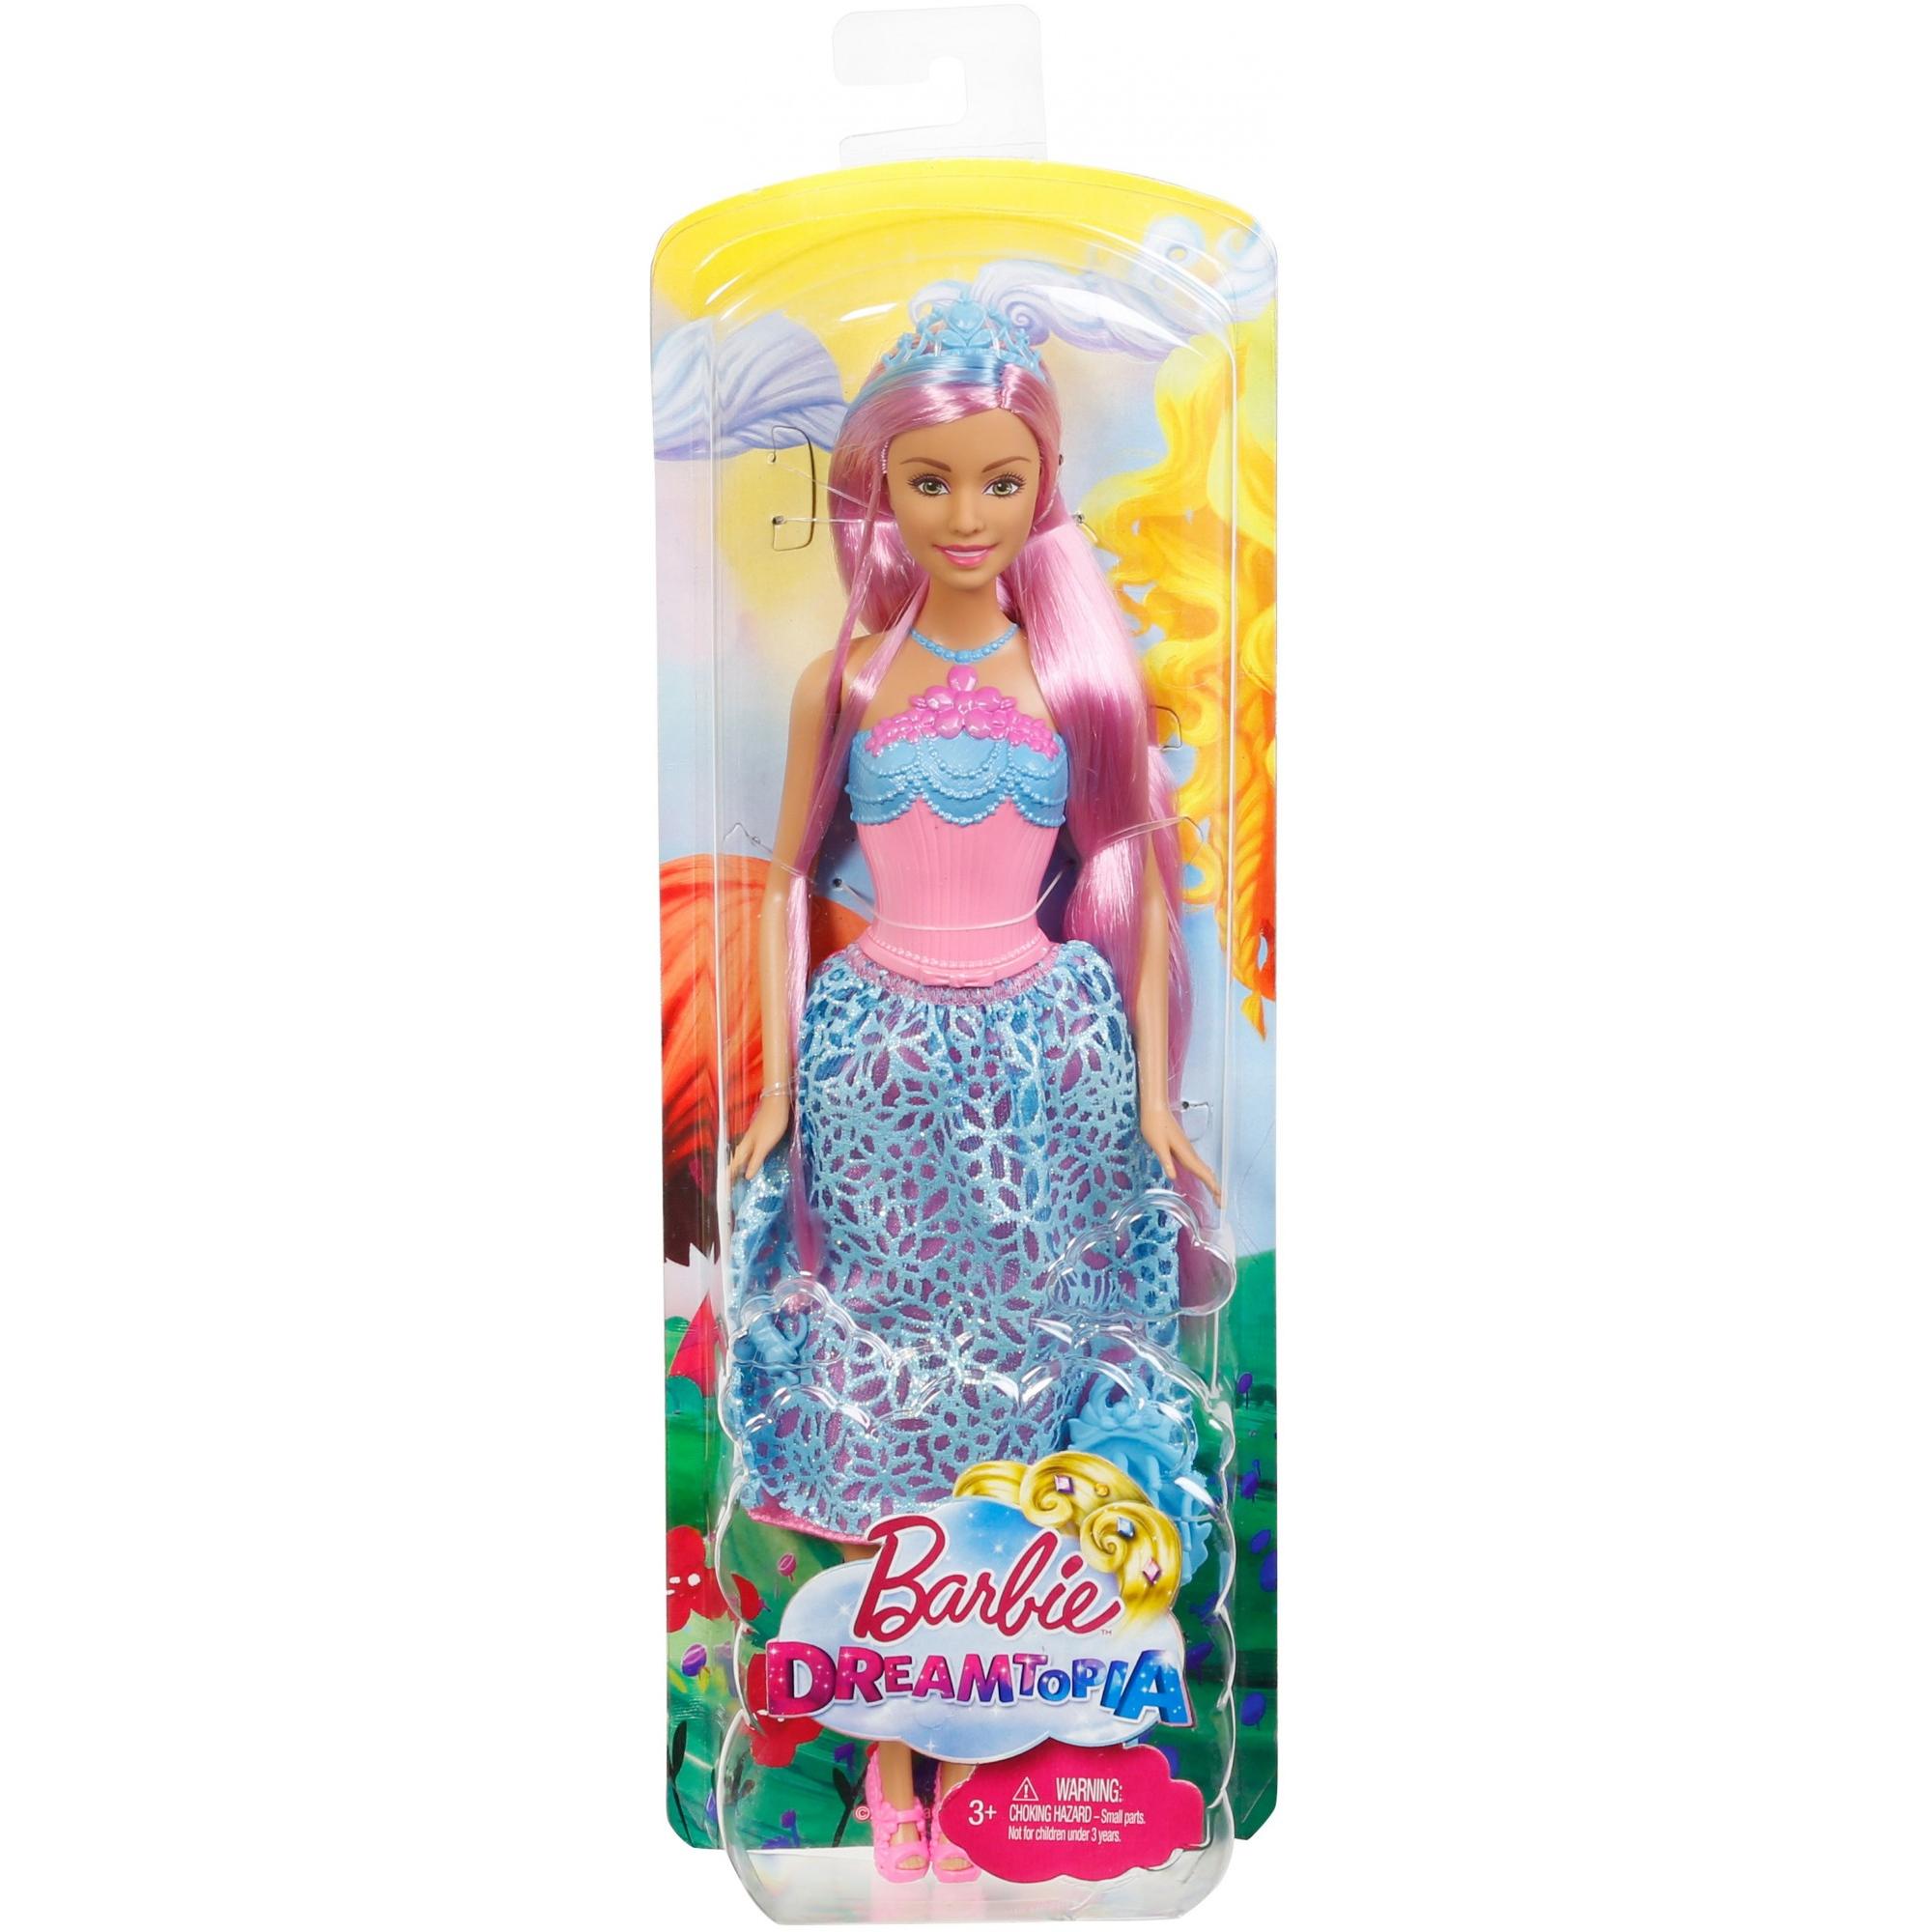 Barbie Endless Hair Kingdom Princess Doll Blue - image 7 of 7